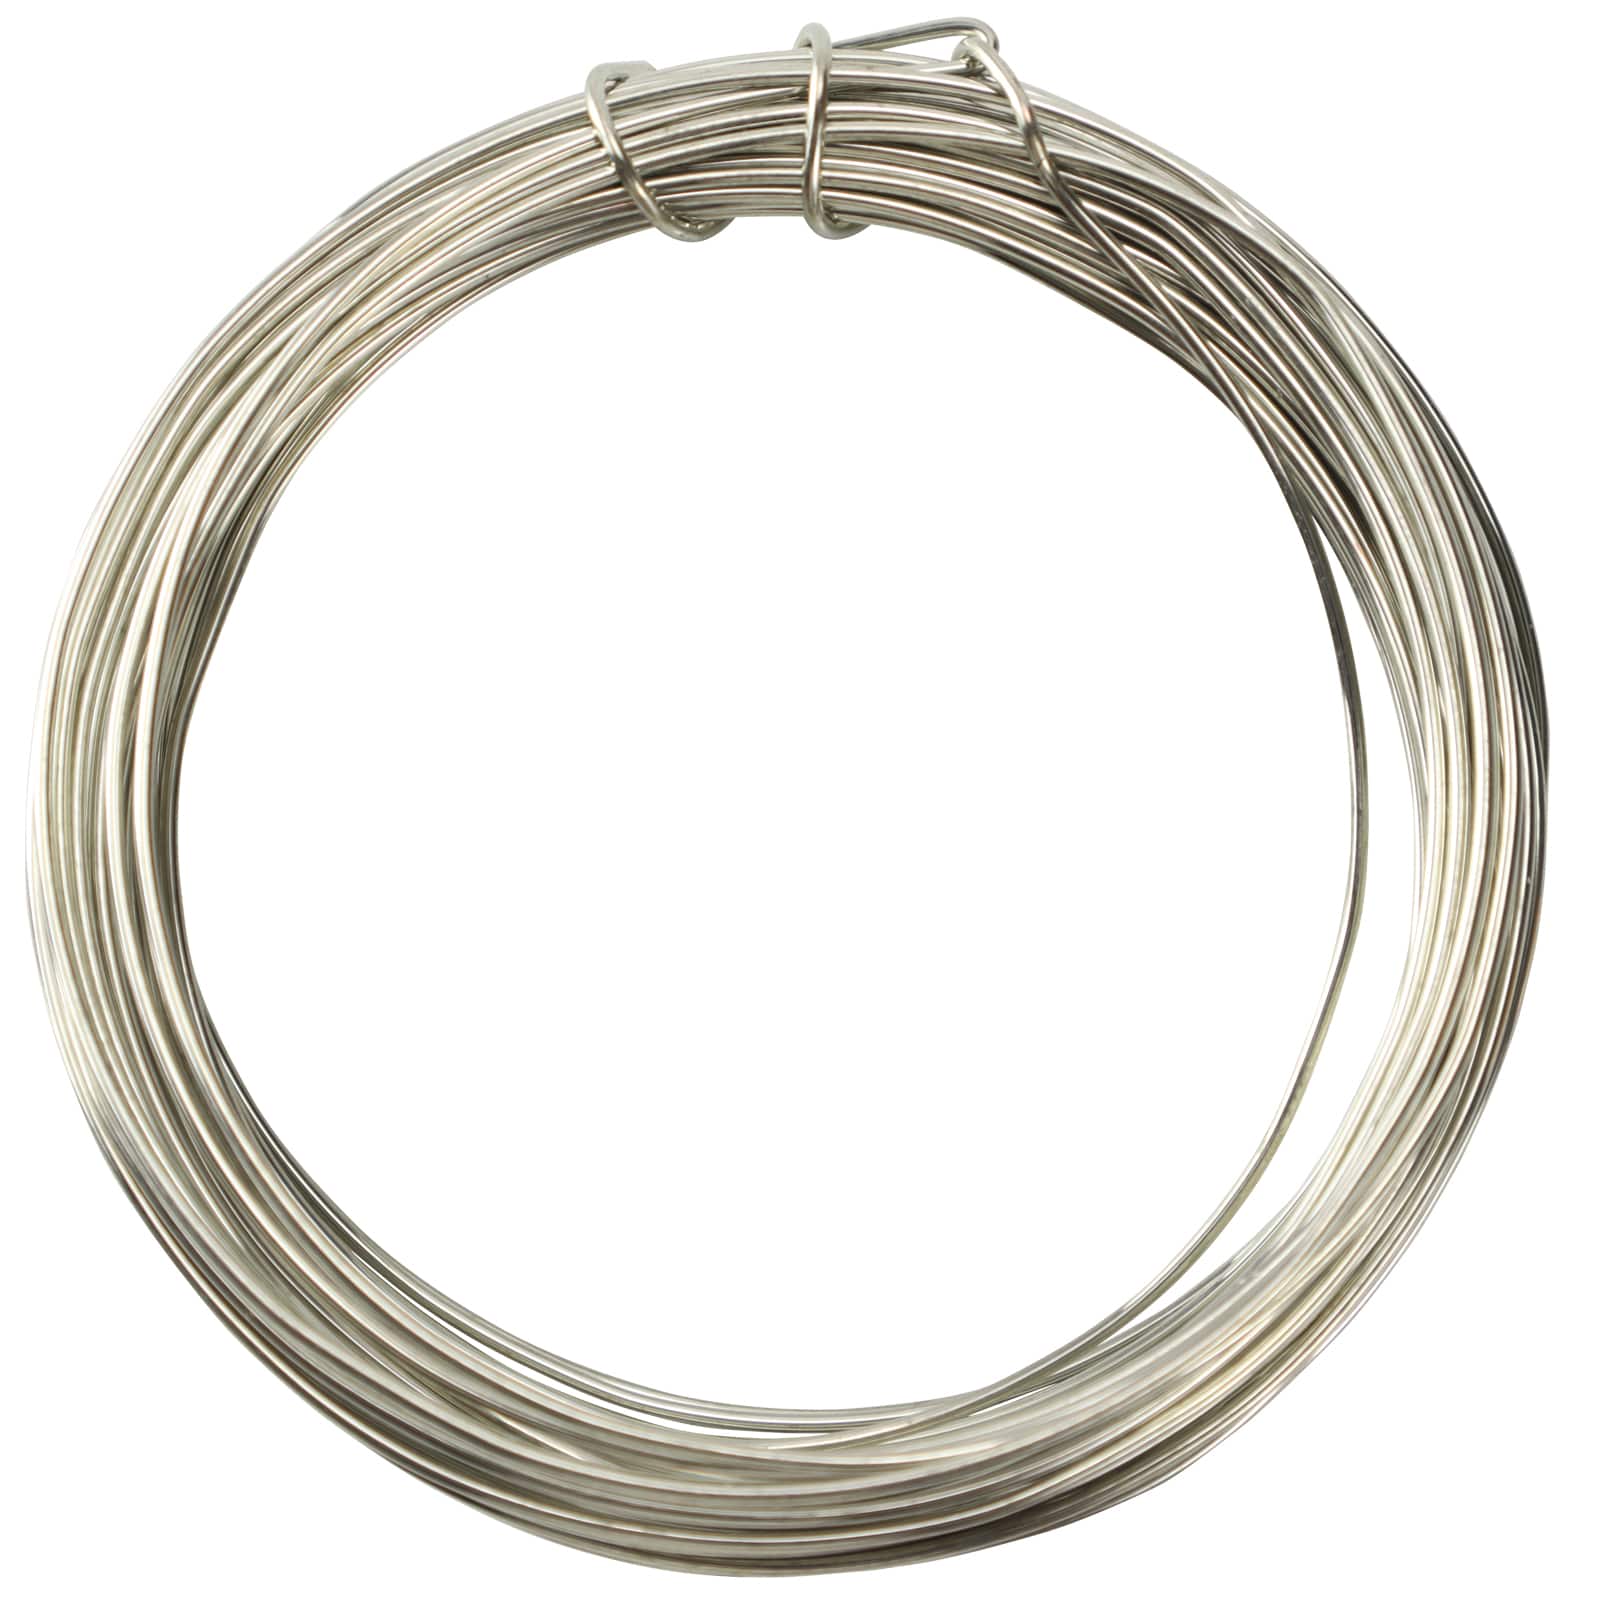 Beadalon® German Style Wire, Round, 24 Gauge